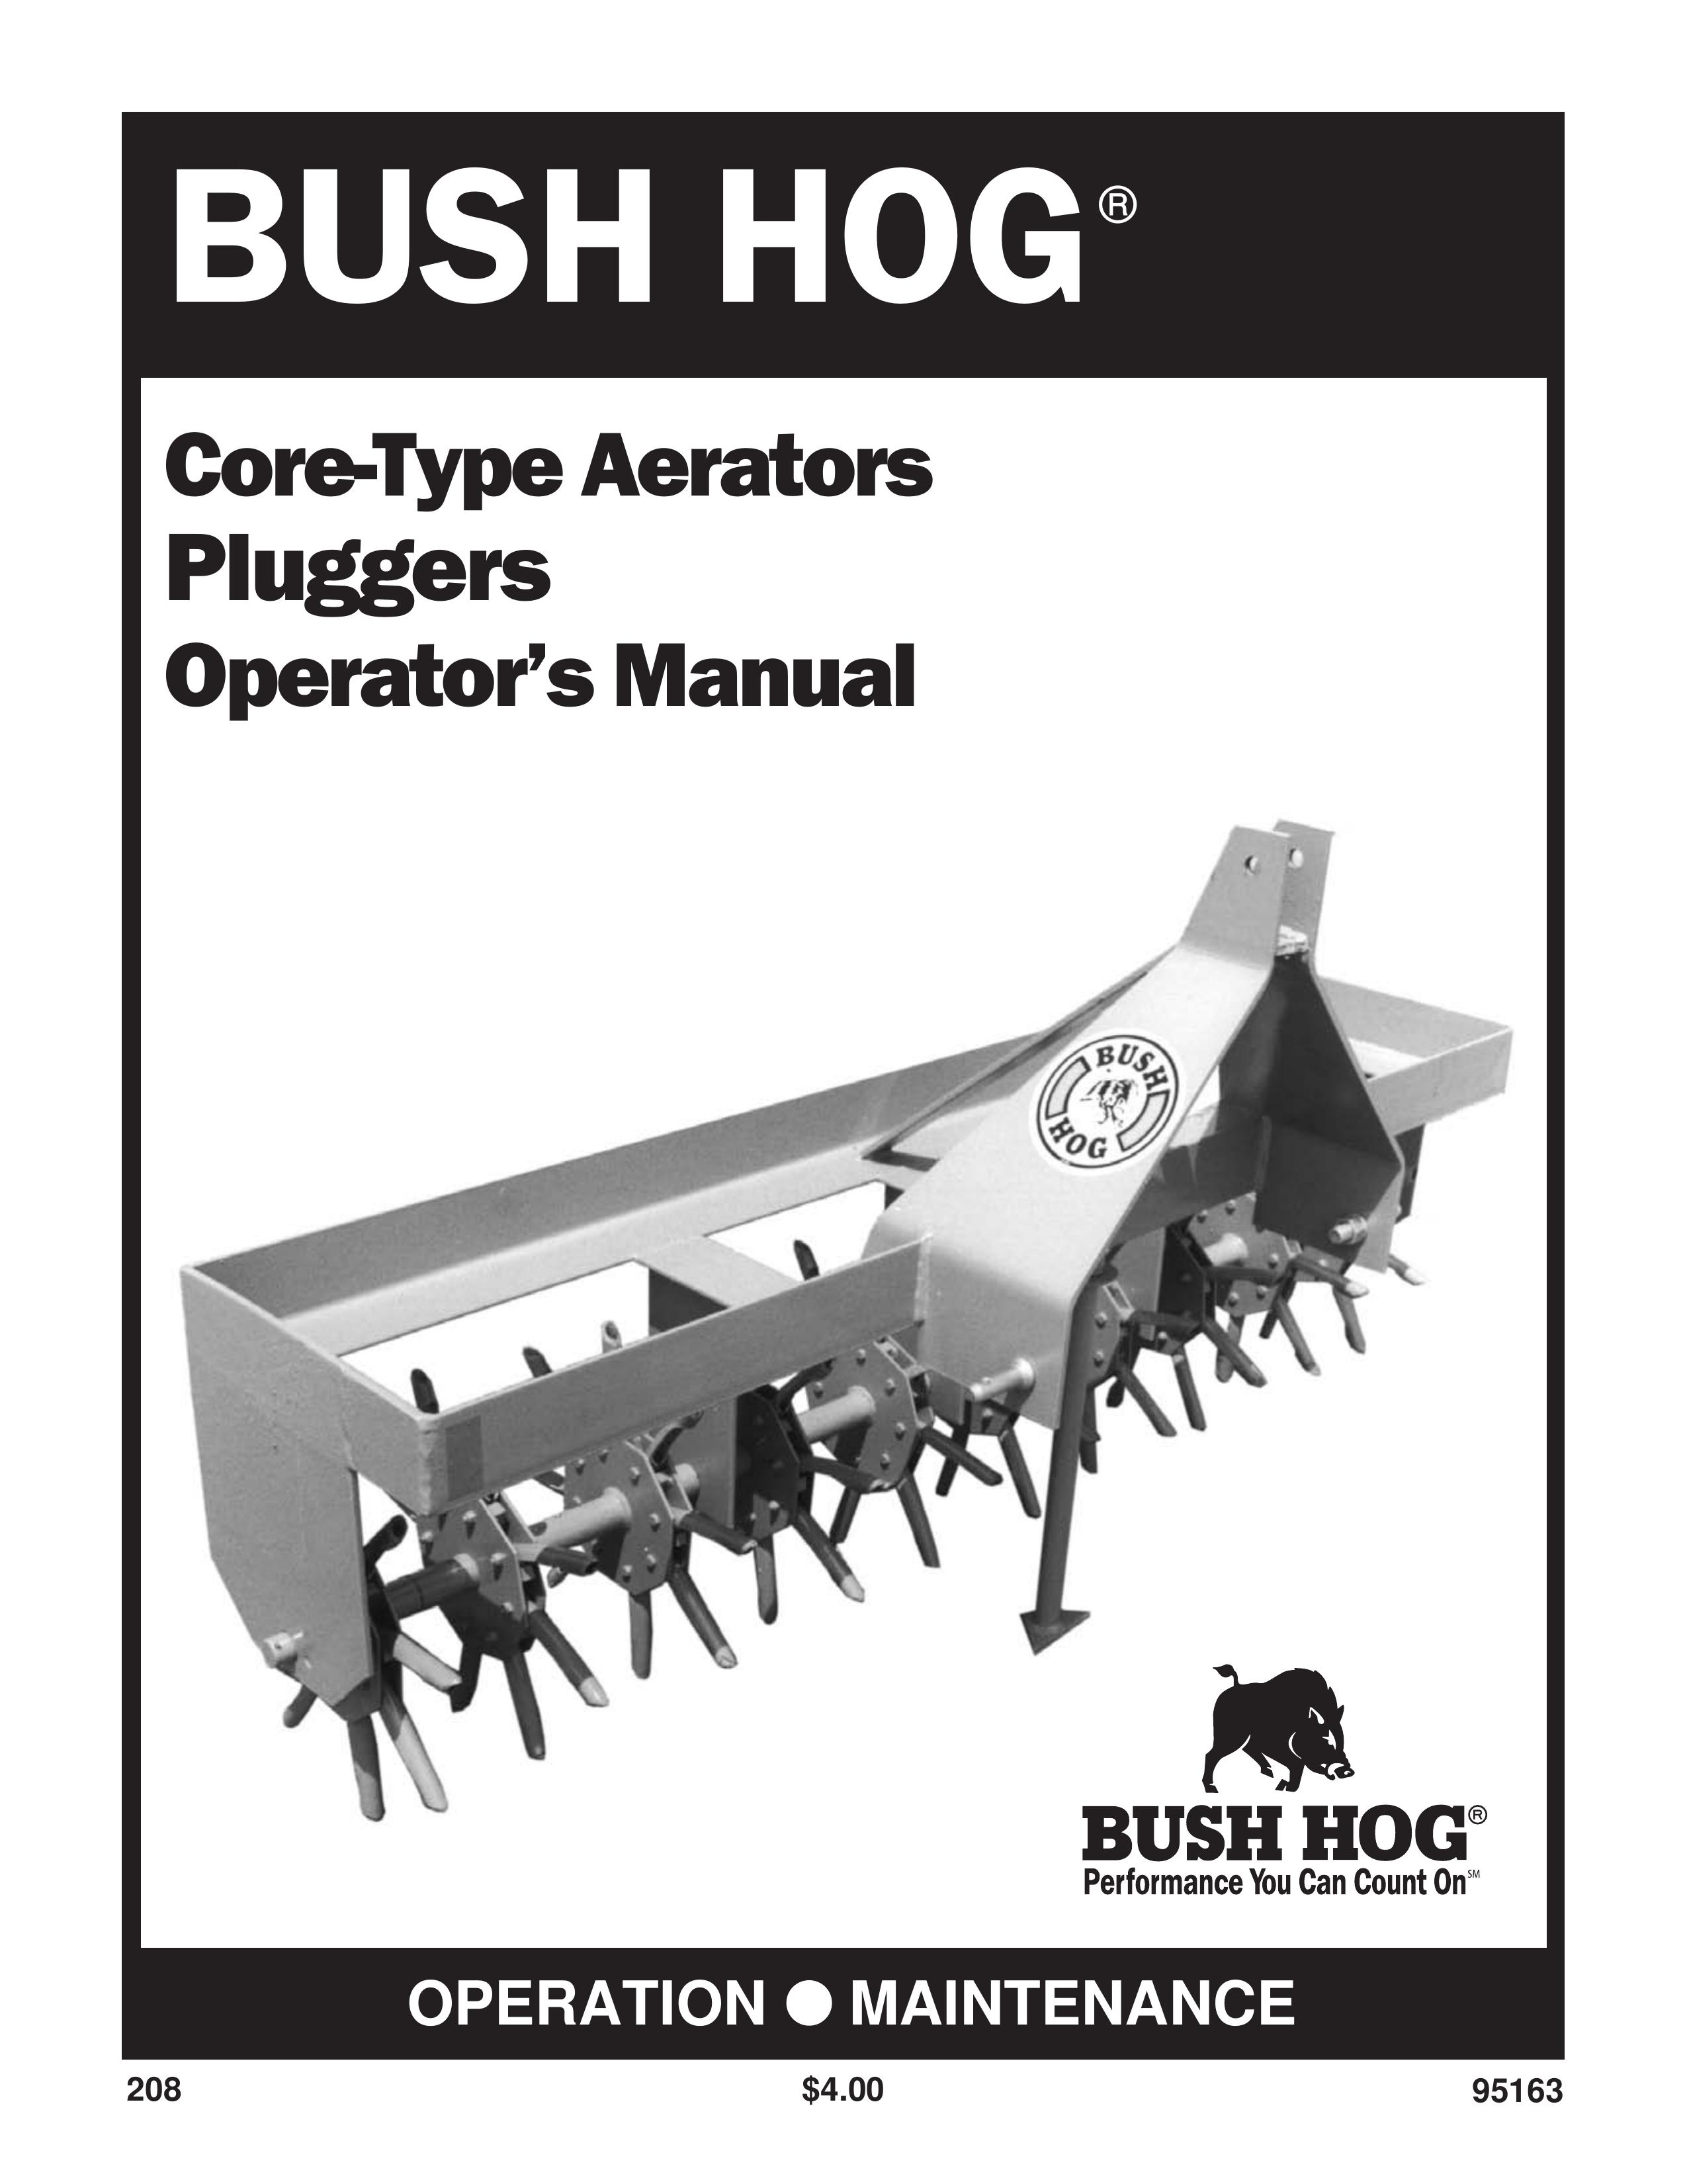 Bush Hog 300 Series Lawn Aerator User Manual